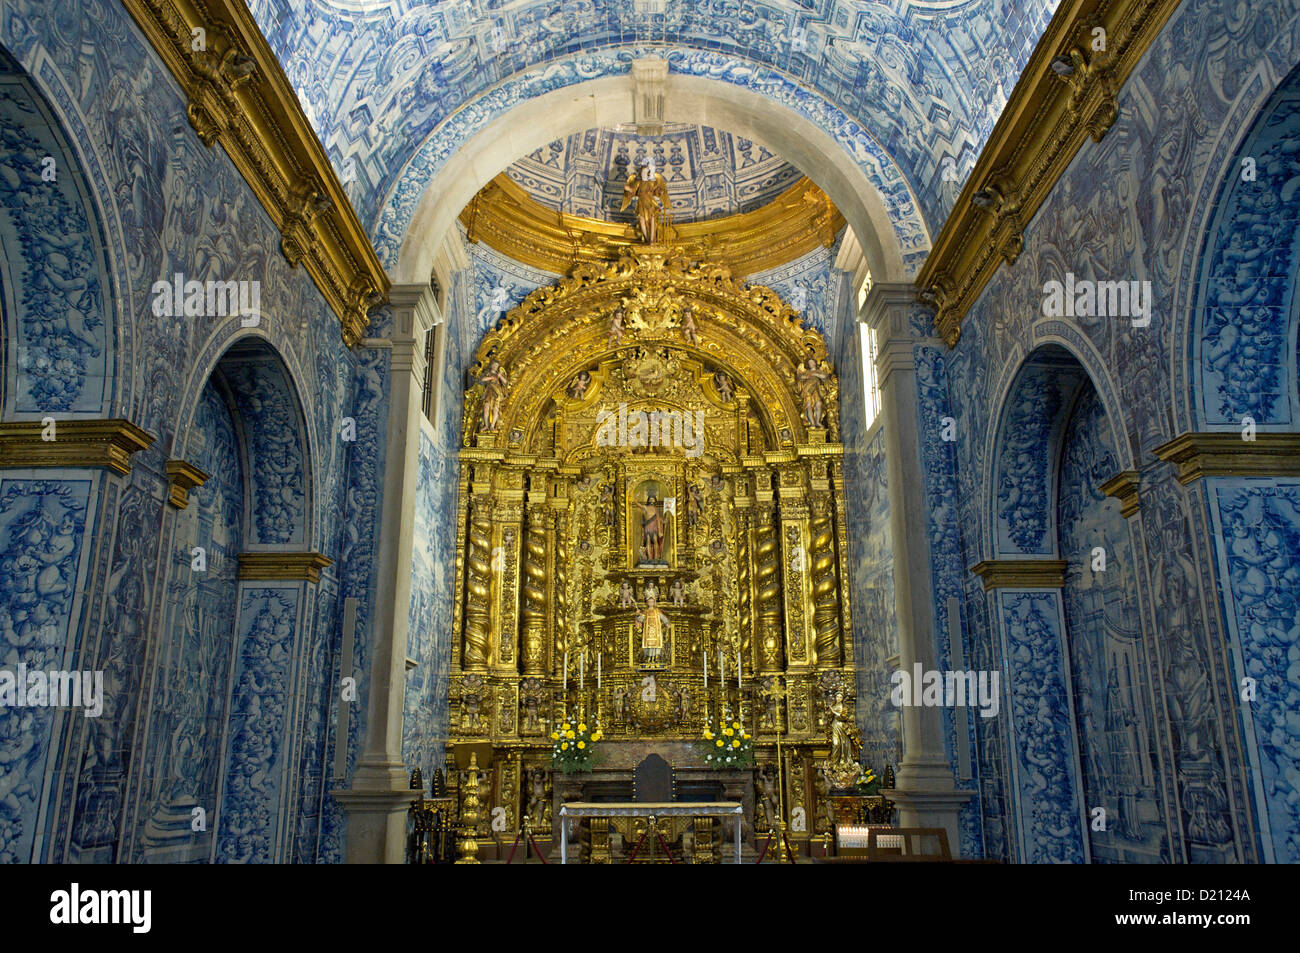 Die Kirche Igreja Sao Lourenco de Matos, Almancil, Barok Altar und blau handbemalt Fliesen, Azulejos, Algarve, Portugal, Europa Stockfoto